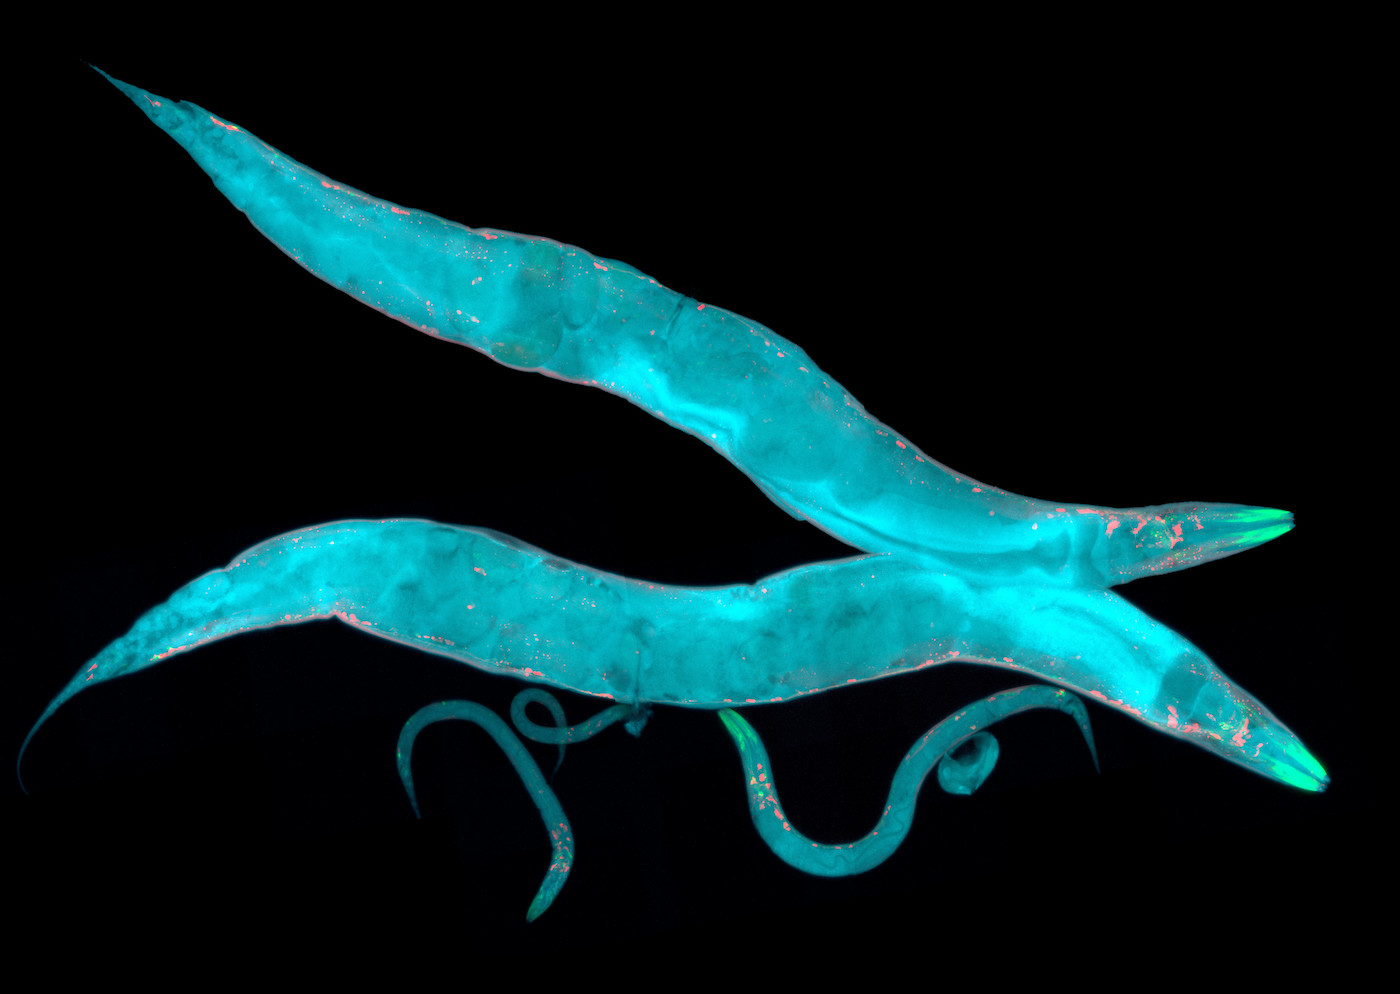 Caenorhabditis elegans, a free-living transparent nematode (roundworm), about 1 mm in length.